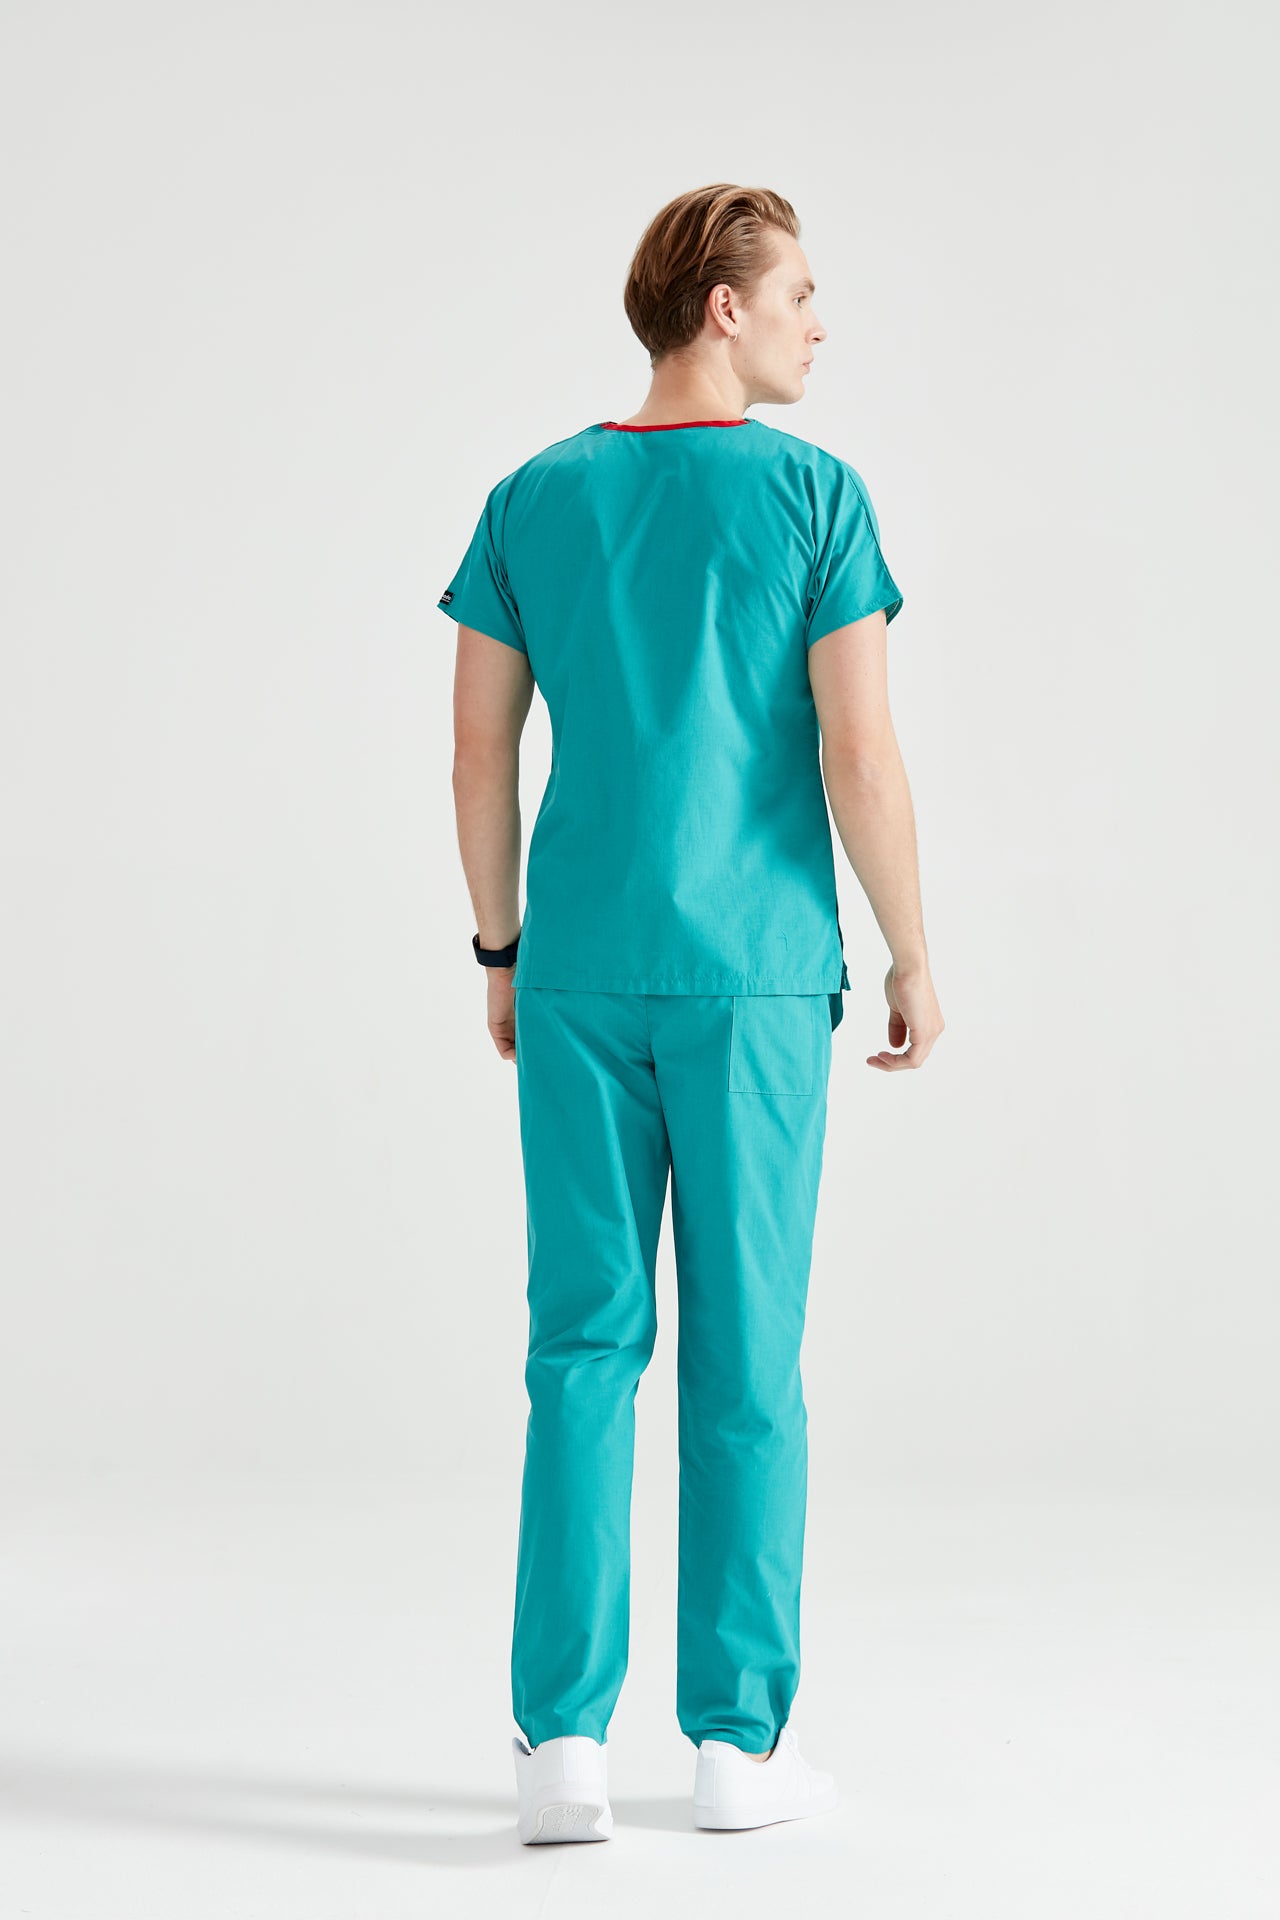 Asistent medical imbracat in costum medical verde chirurgical Surgical Green, pentru barbati, vedere din spate